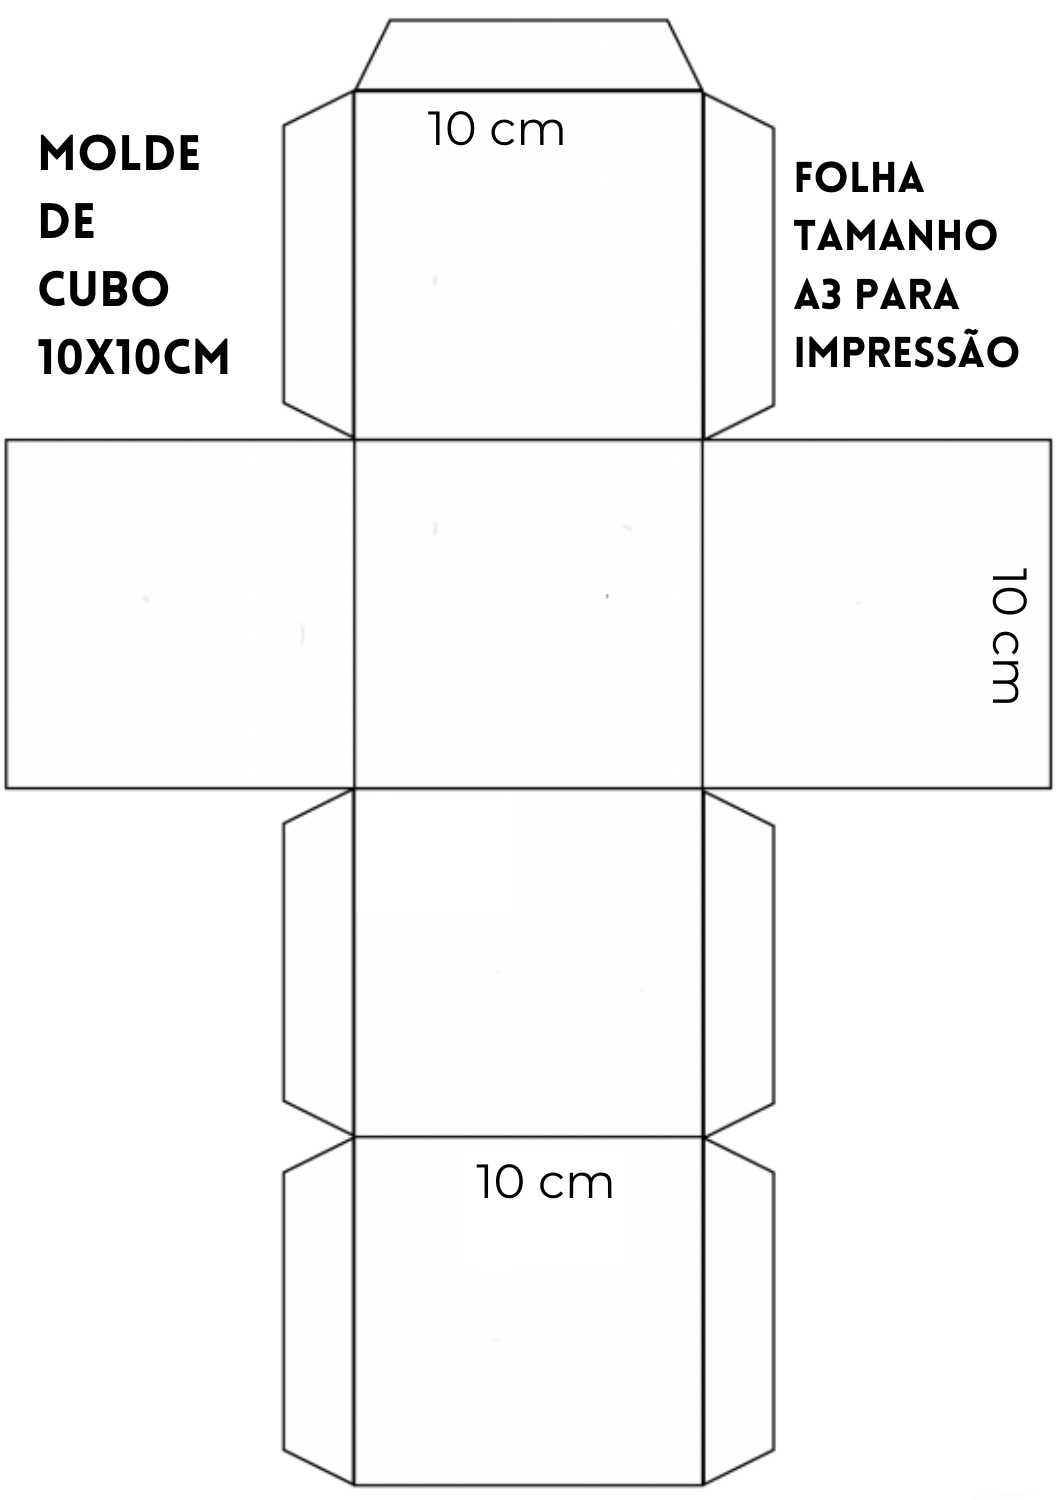 Molde de Cubo 10x10 para imprimir